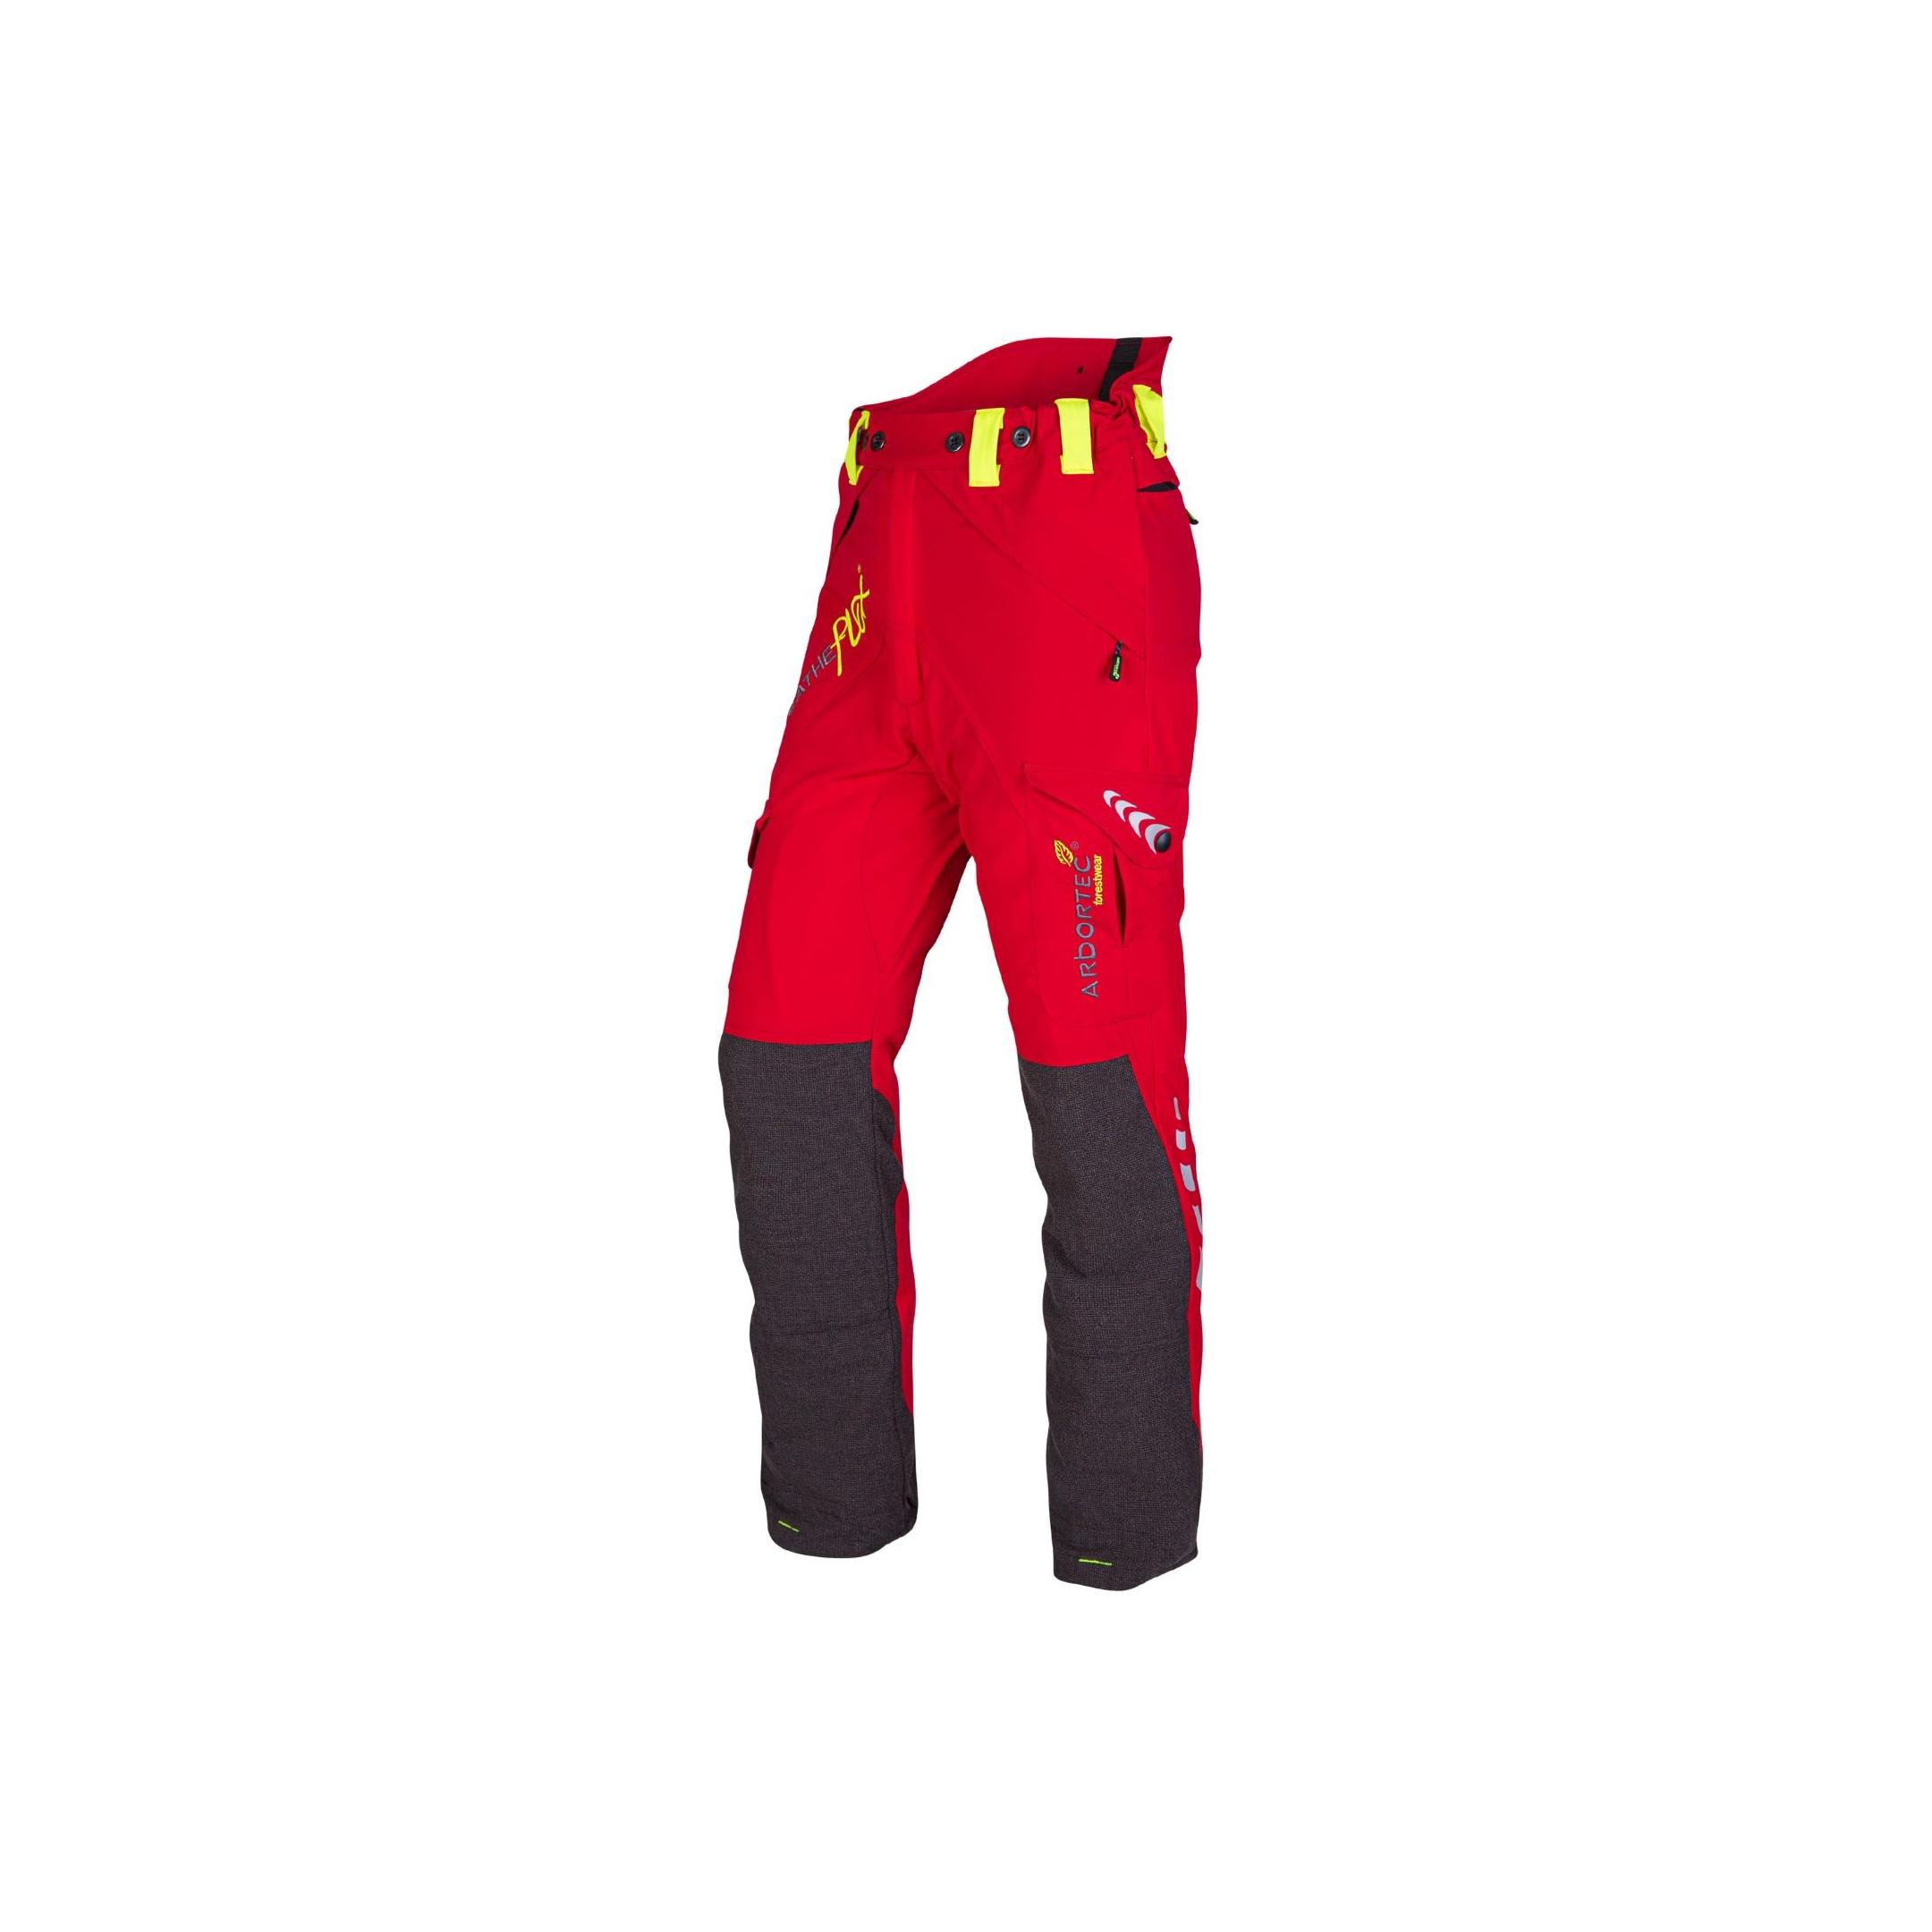 Pantaloni antitaglio BreatheFlex Rosso classe 1 Arbortec  - Arbortec - Pantaloni Antitaglio